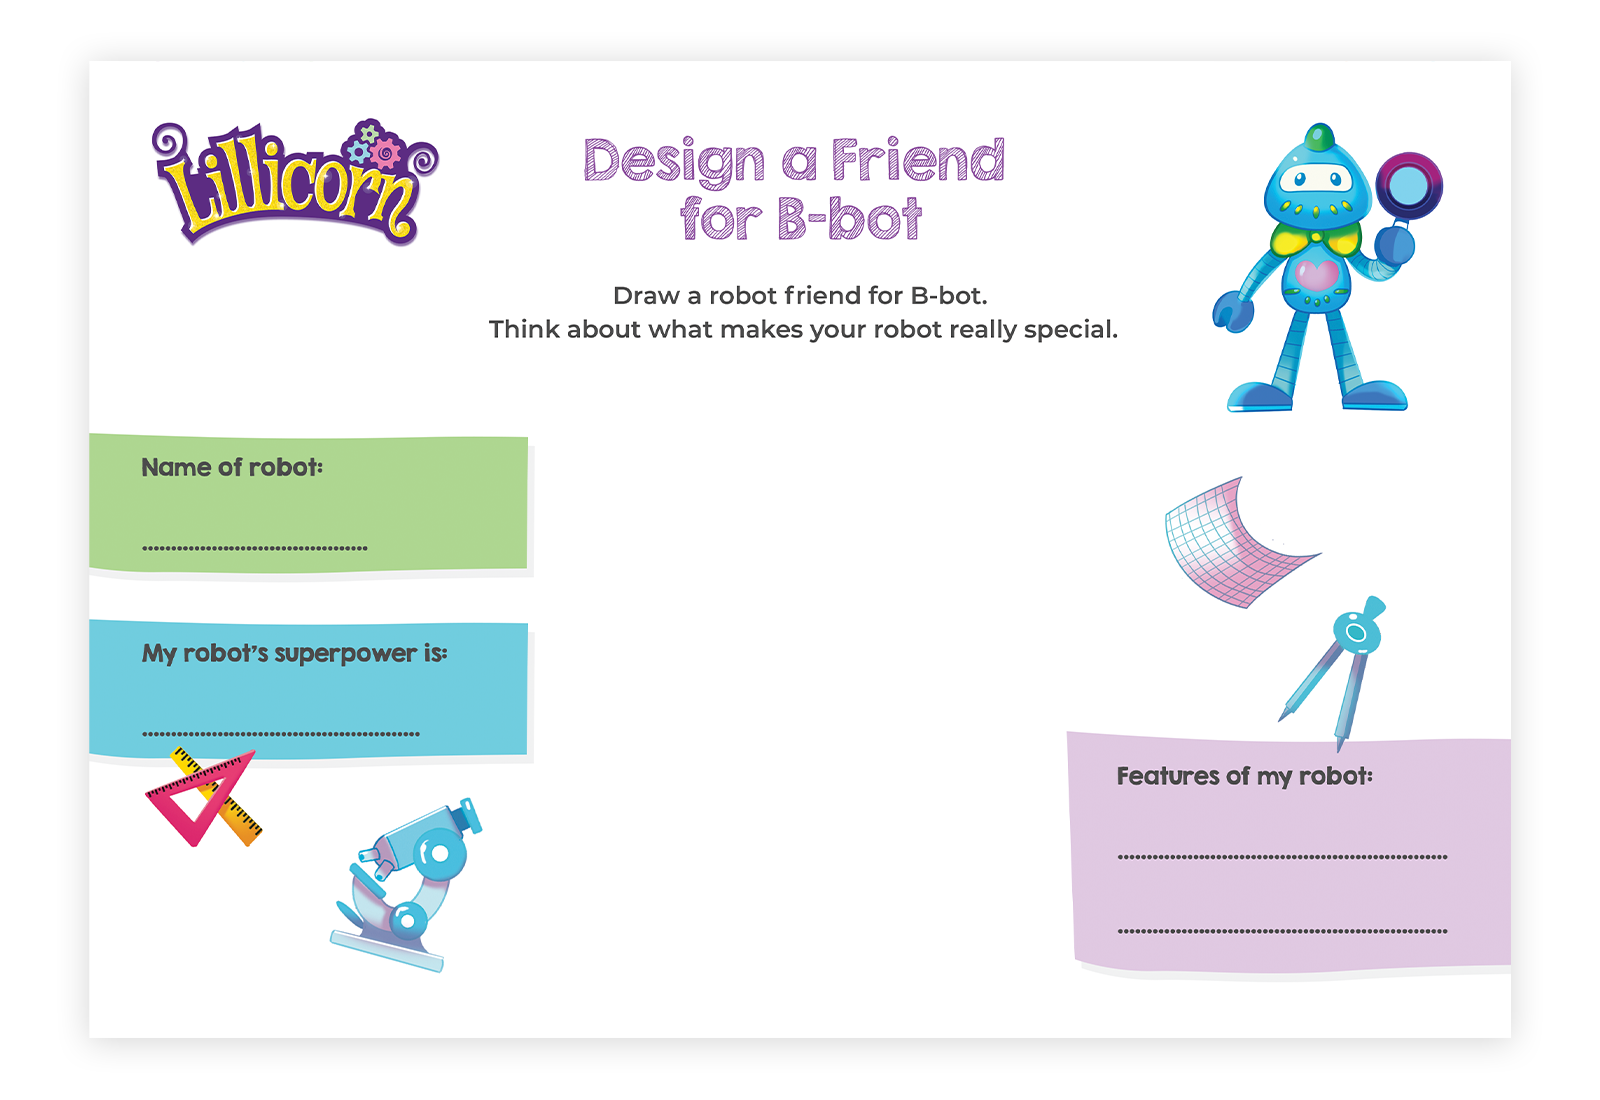 Design a new friend for B-bot